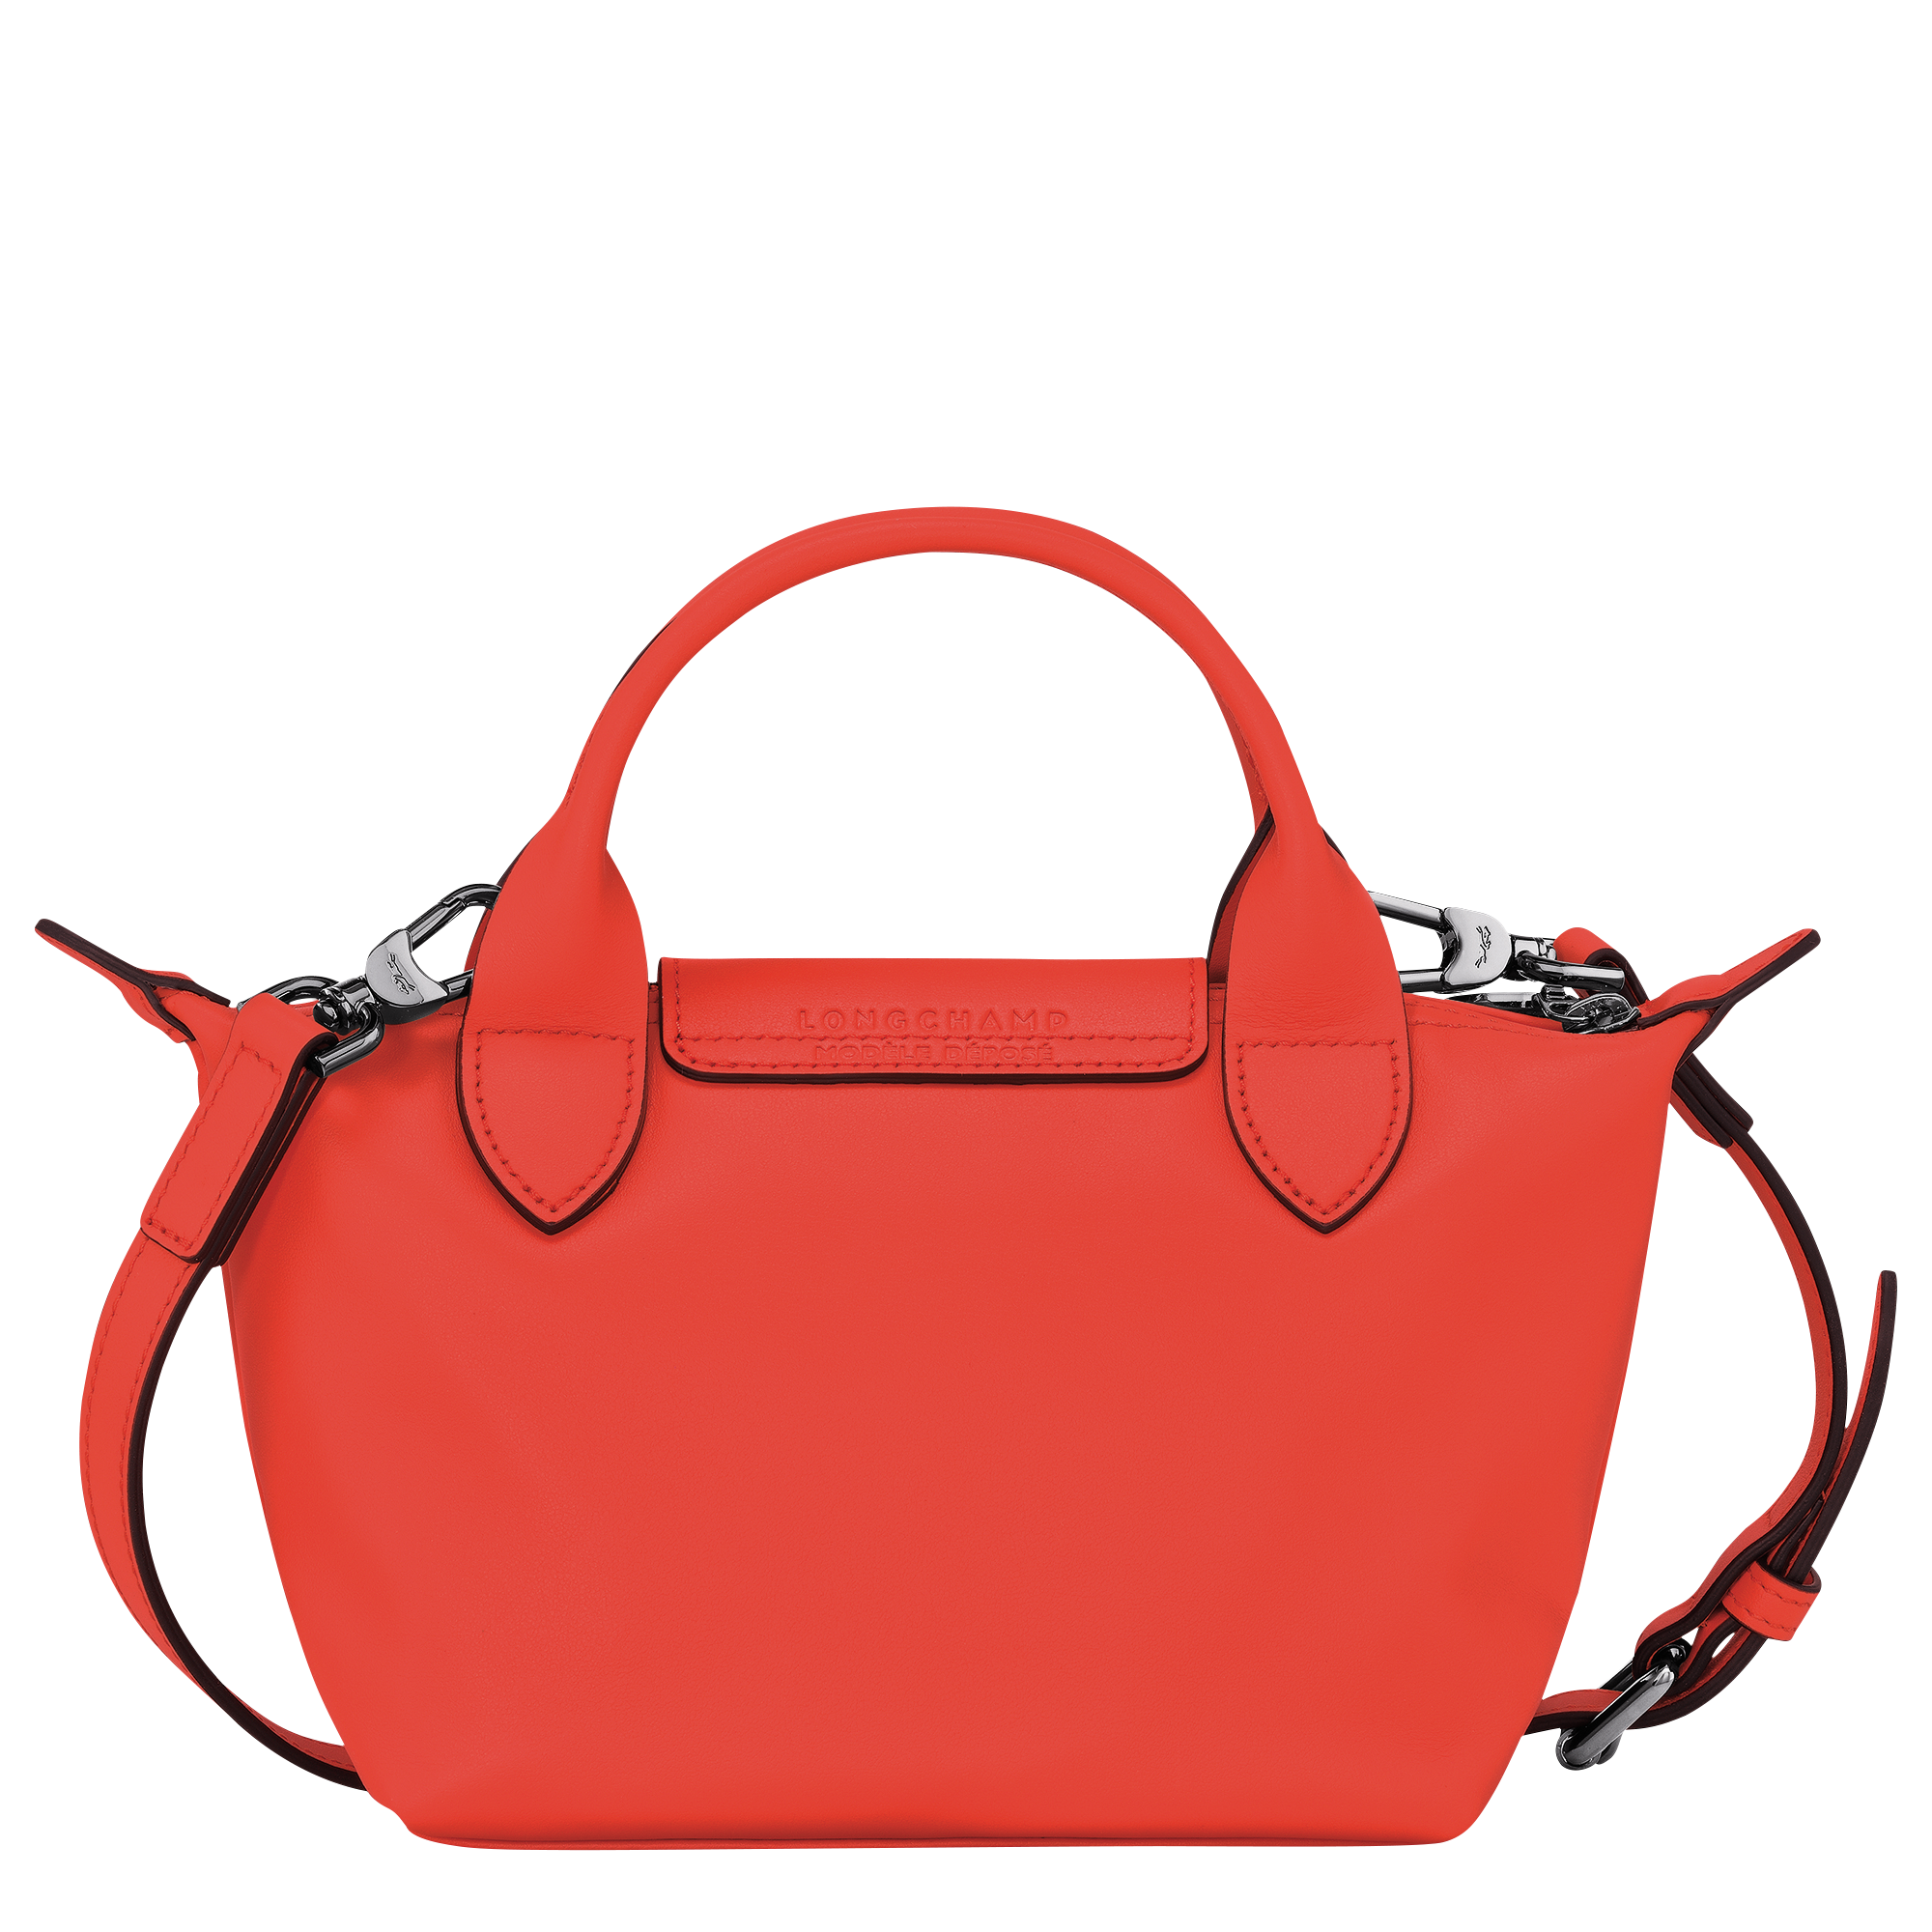 Deux Lux Handbag Soft Tote Bag in Ecru with Neon Orange Handle